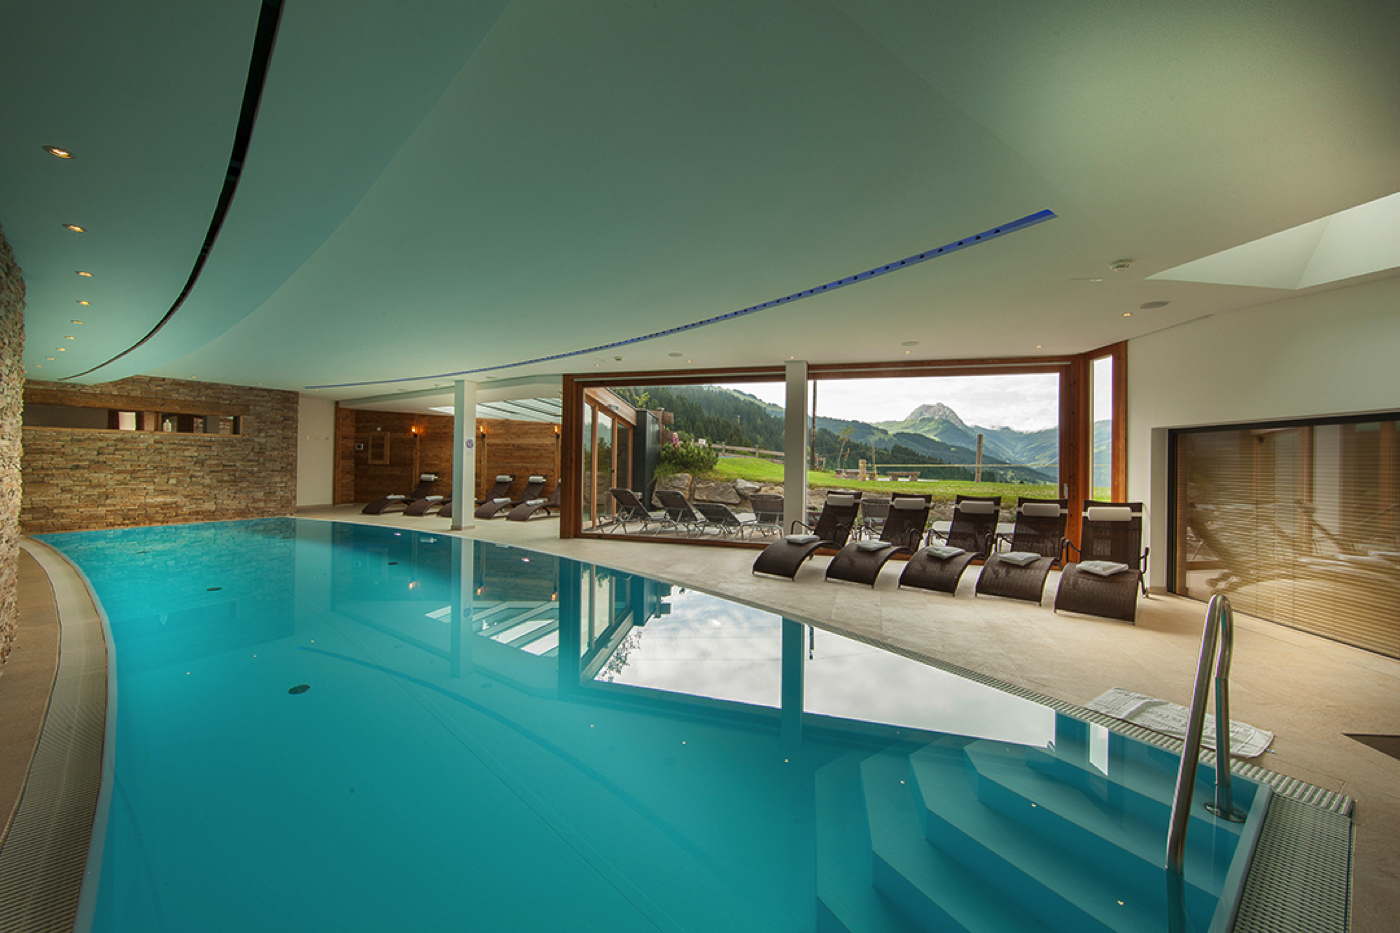 Austria-Kitzbühel-chalet-cottage-skiing lodge-design hotel-charming skiing hotel